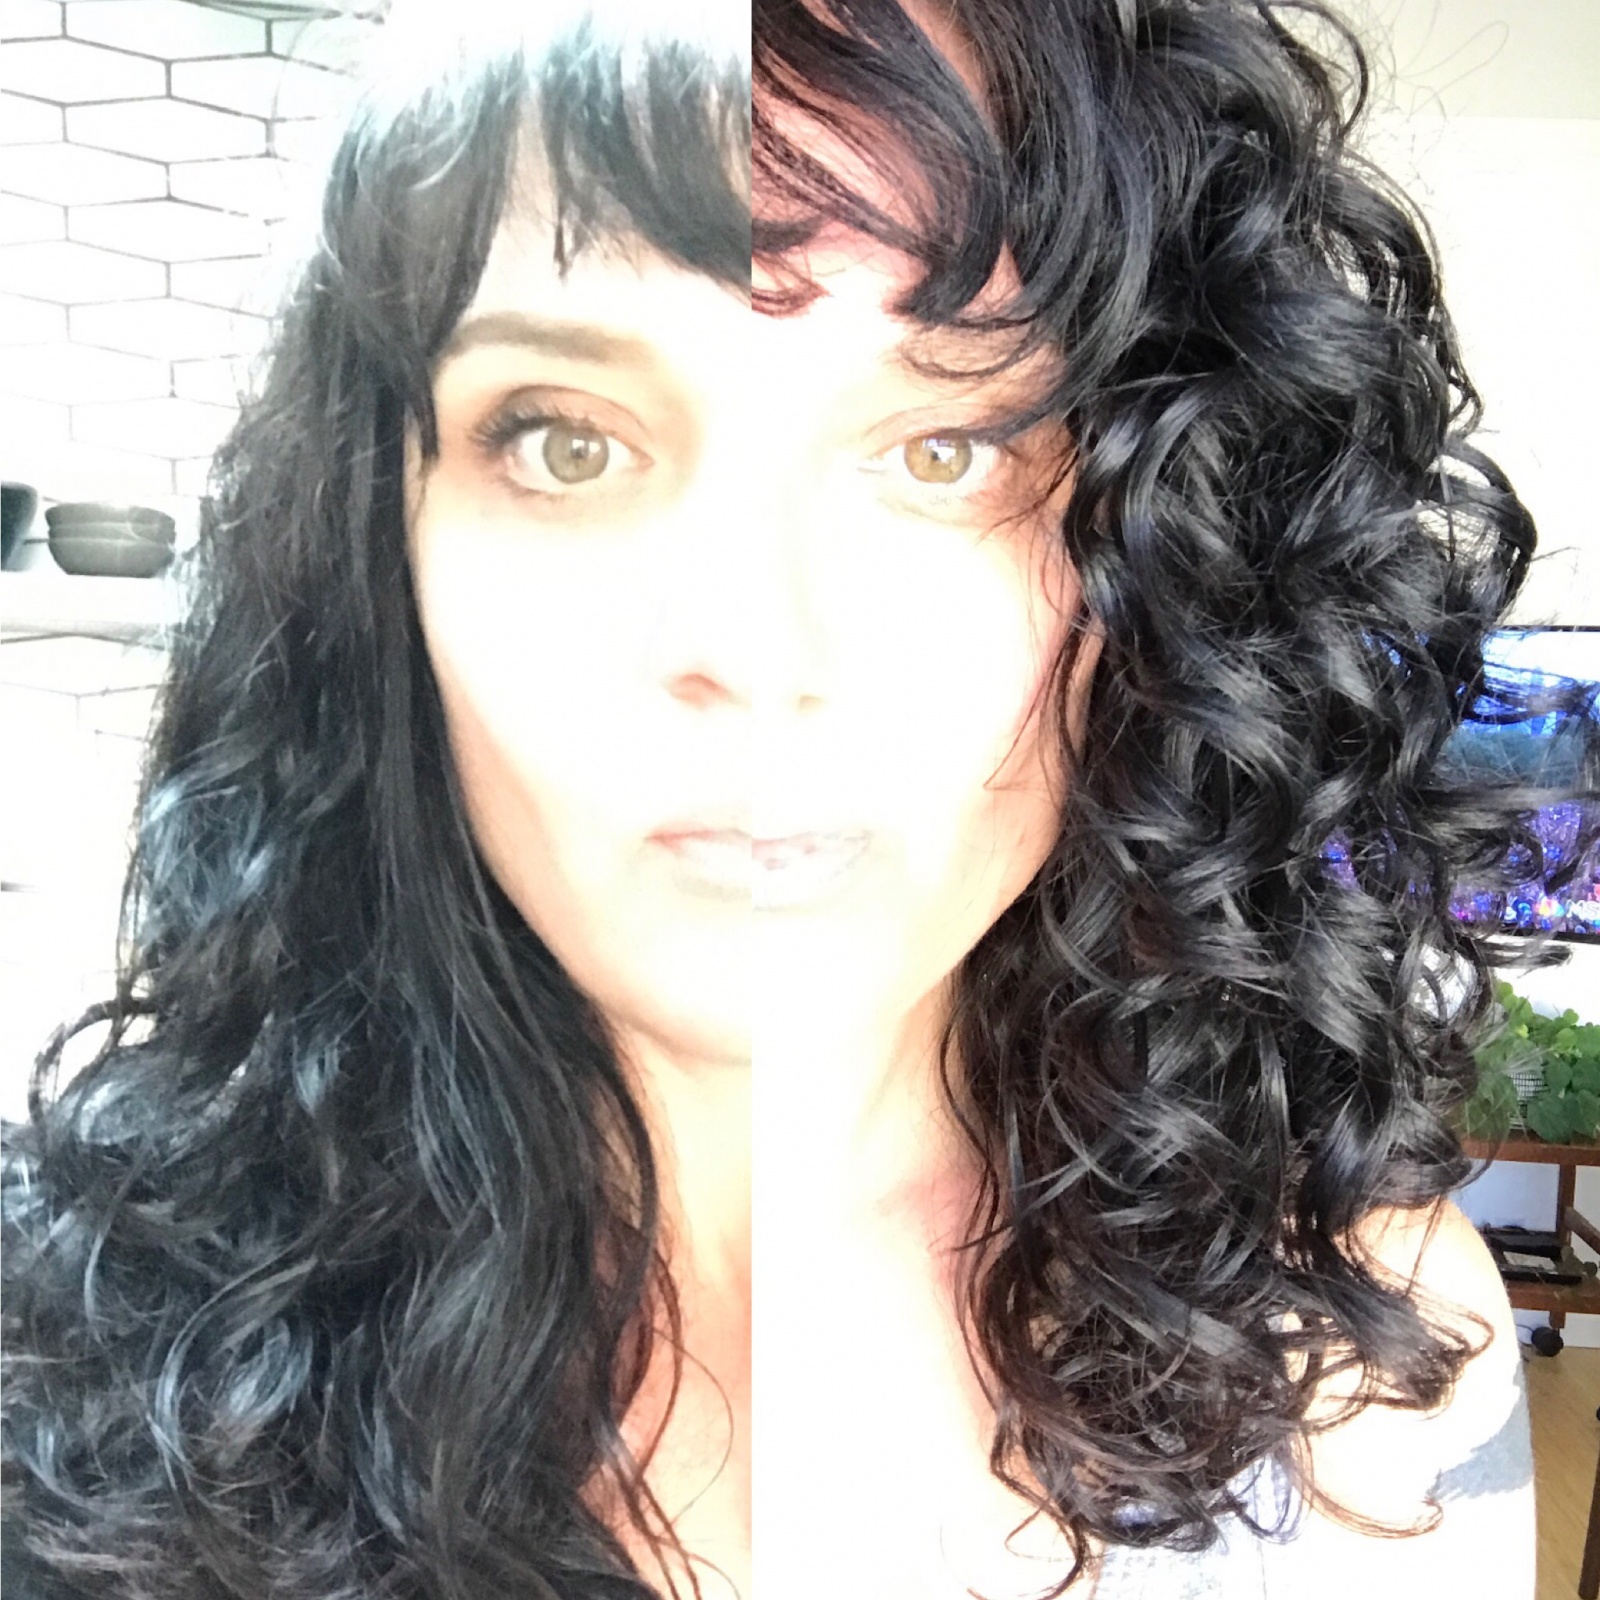 Is my hair getting messy too fast? : r/curlyhair